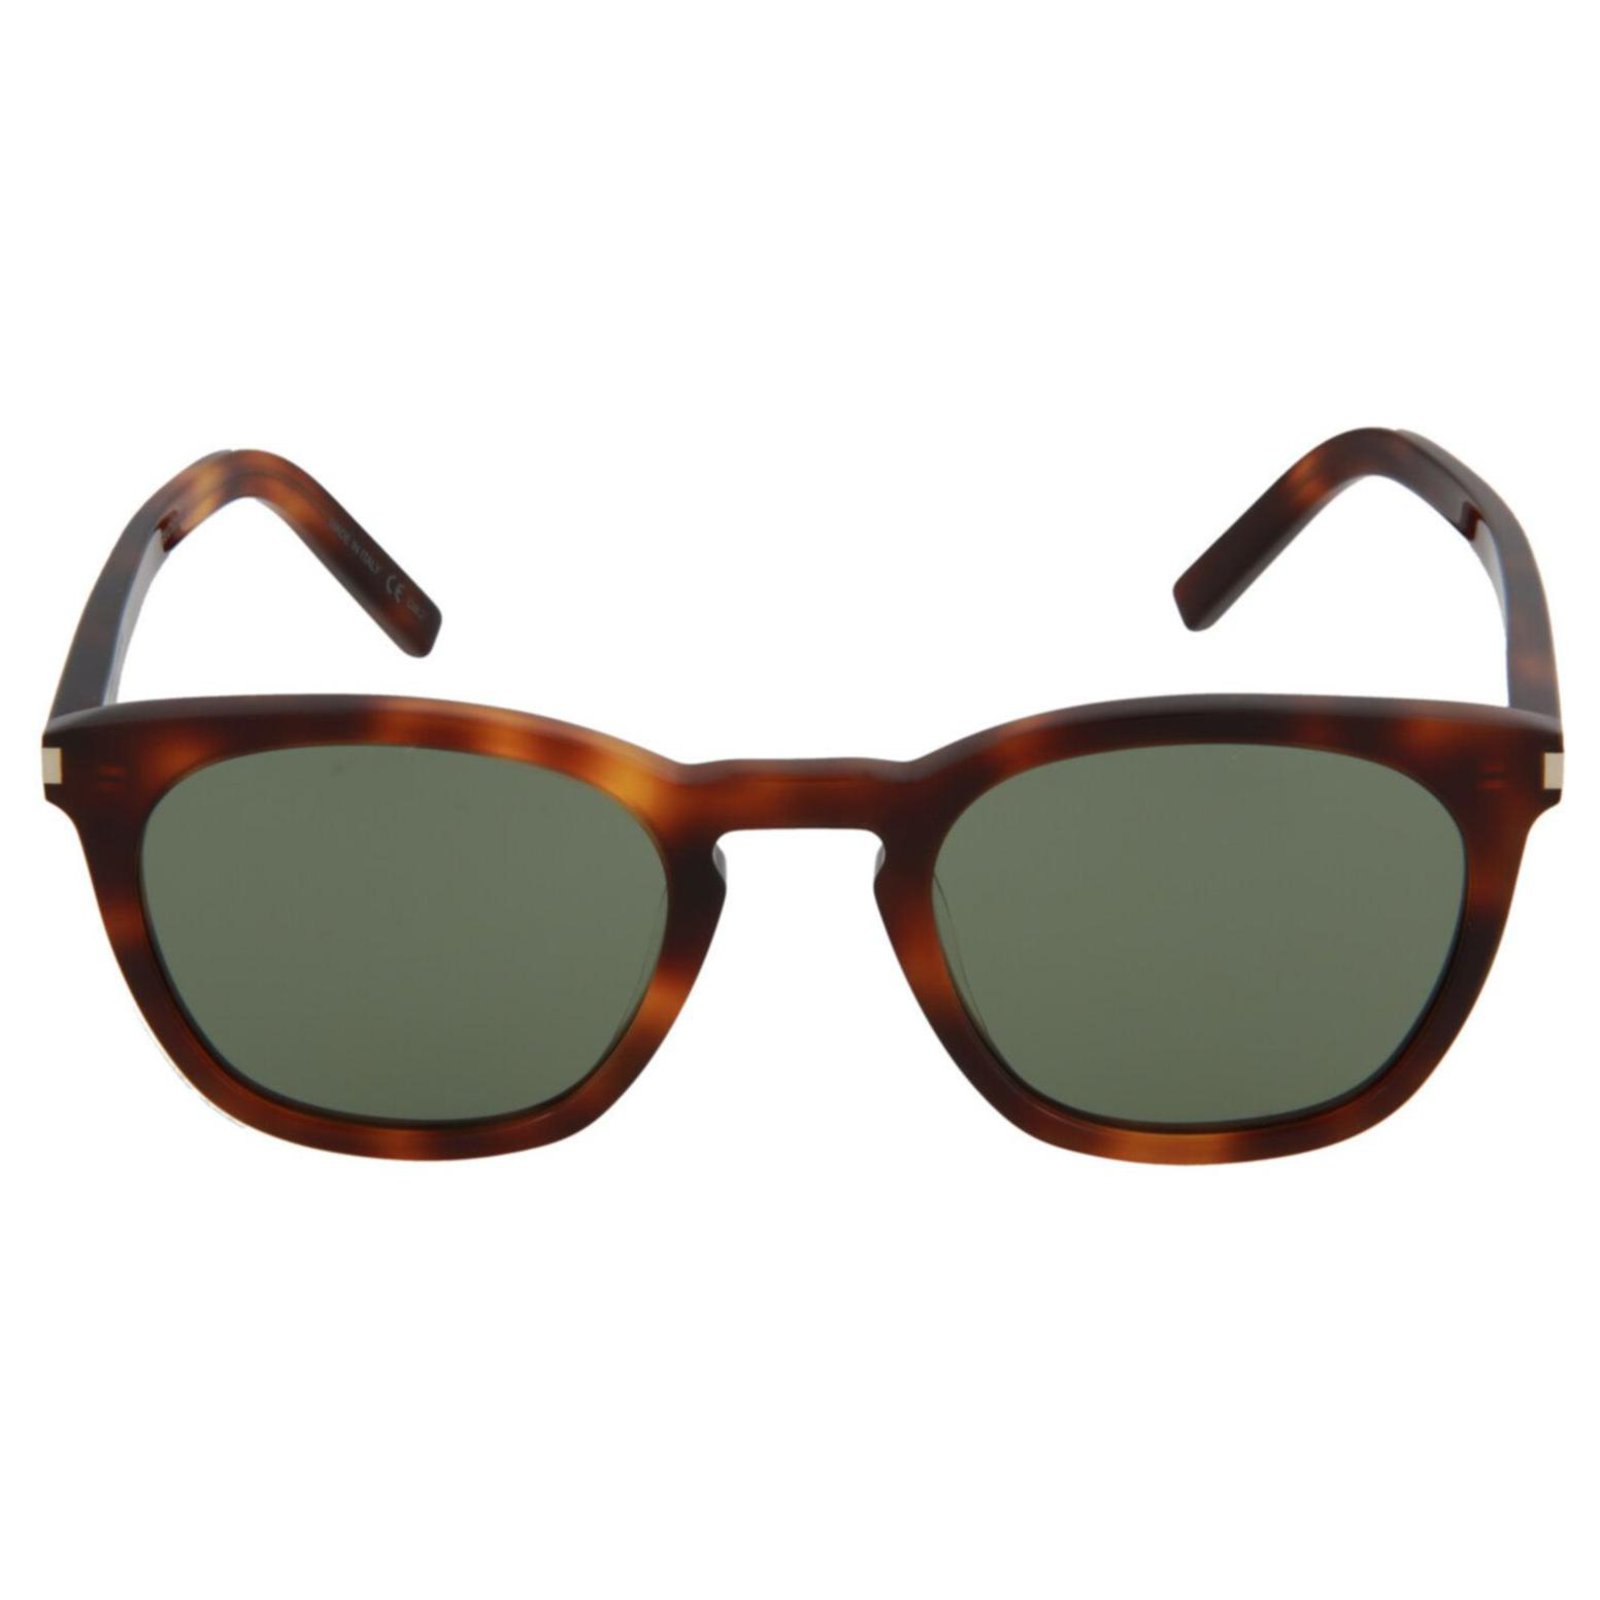 Sunglasses- Saint Laurent - Acetate - Green